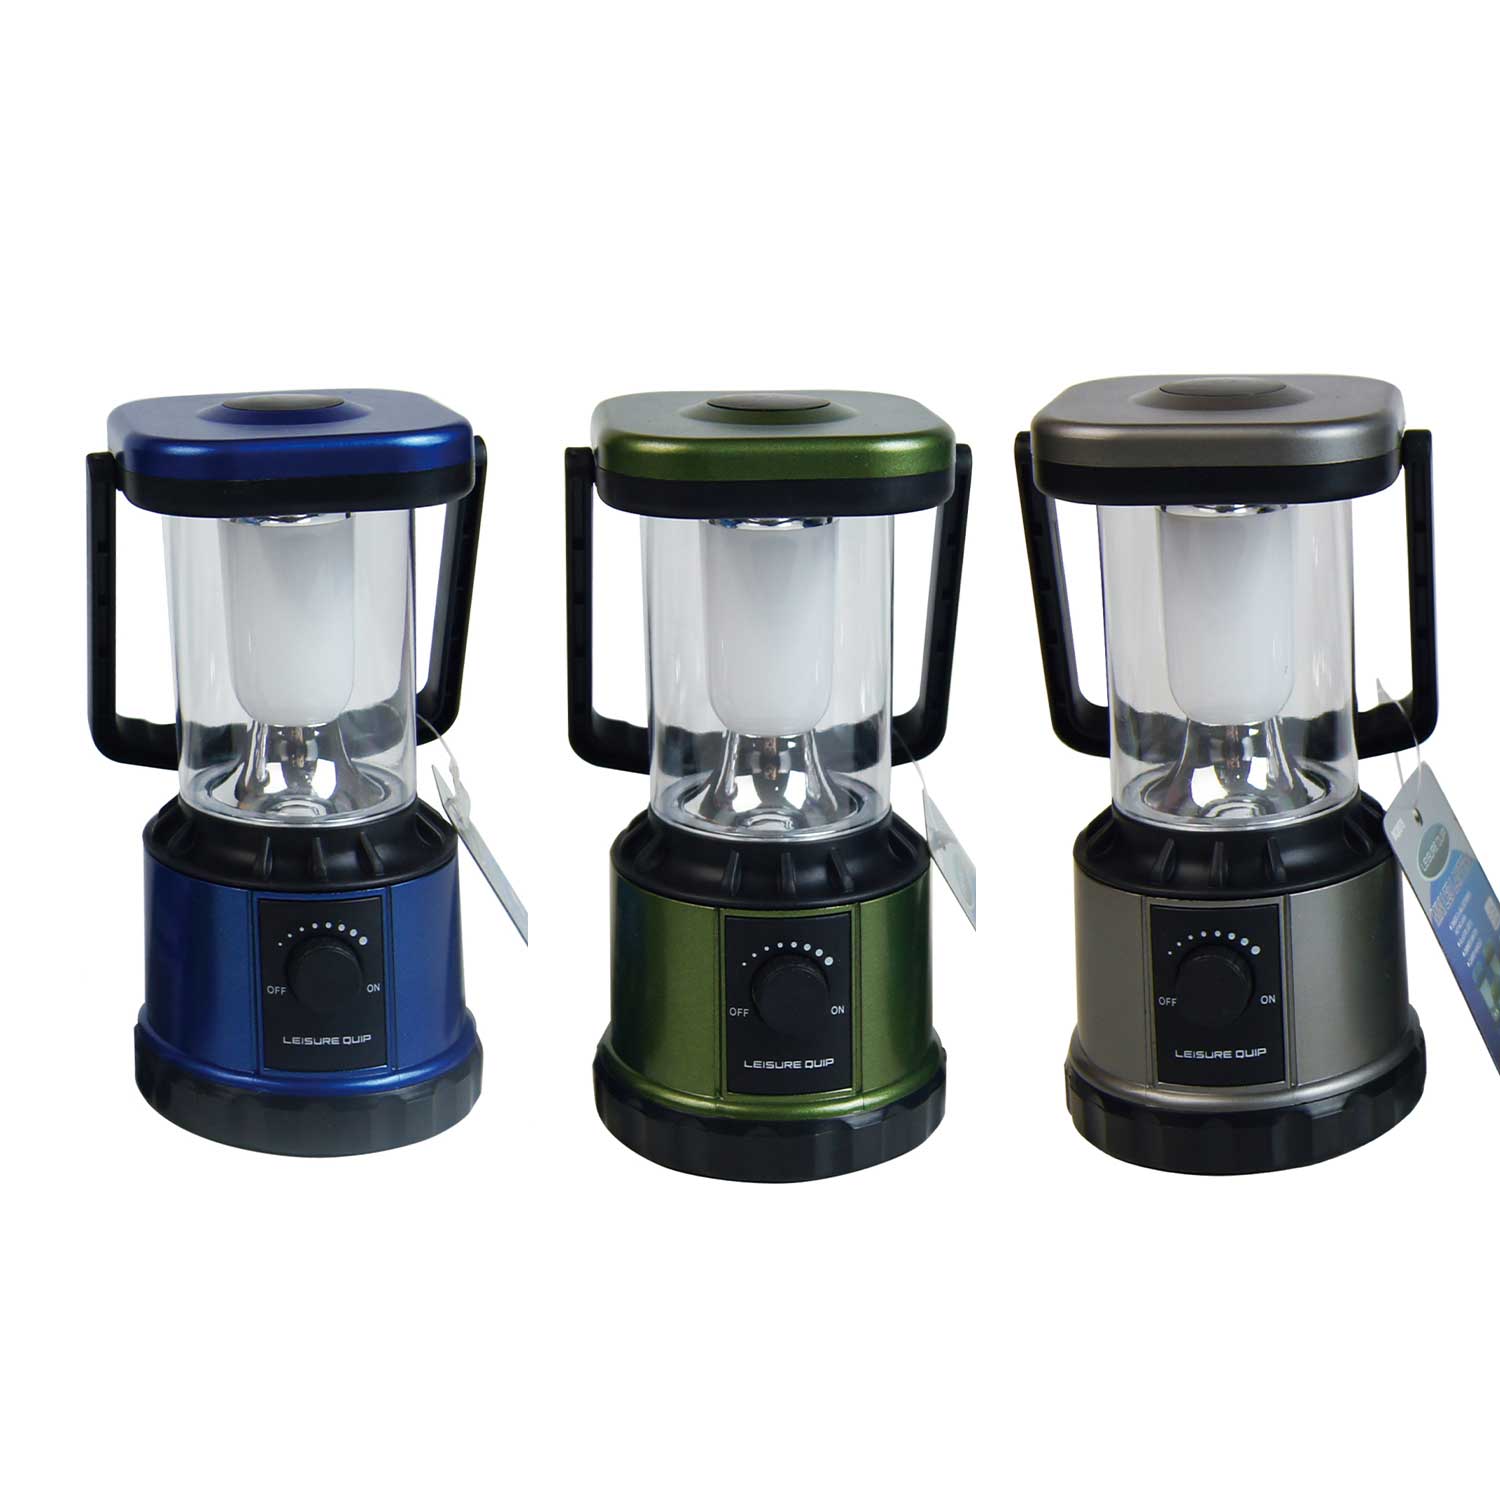 Leisure Quip mini Lantern with Dimmer, Brights